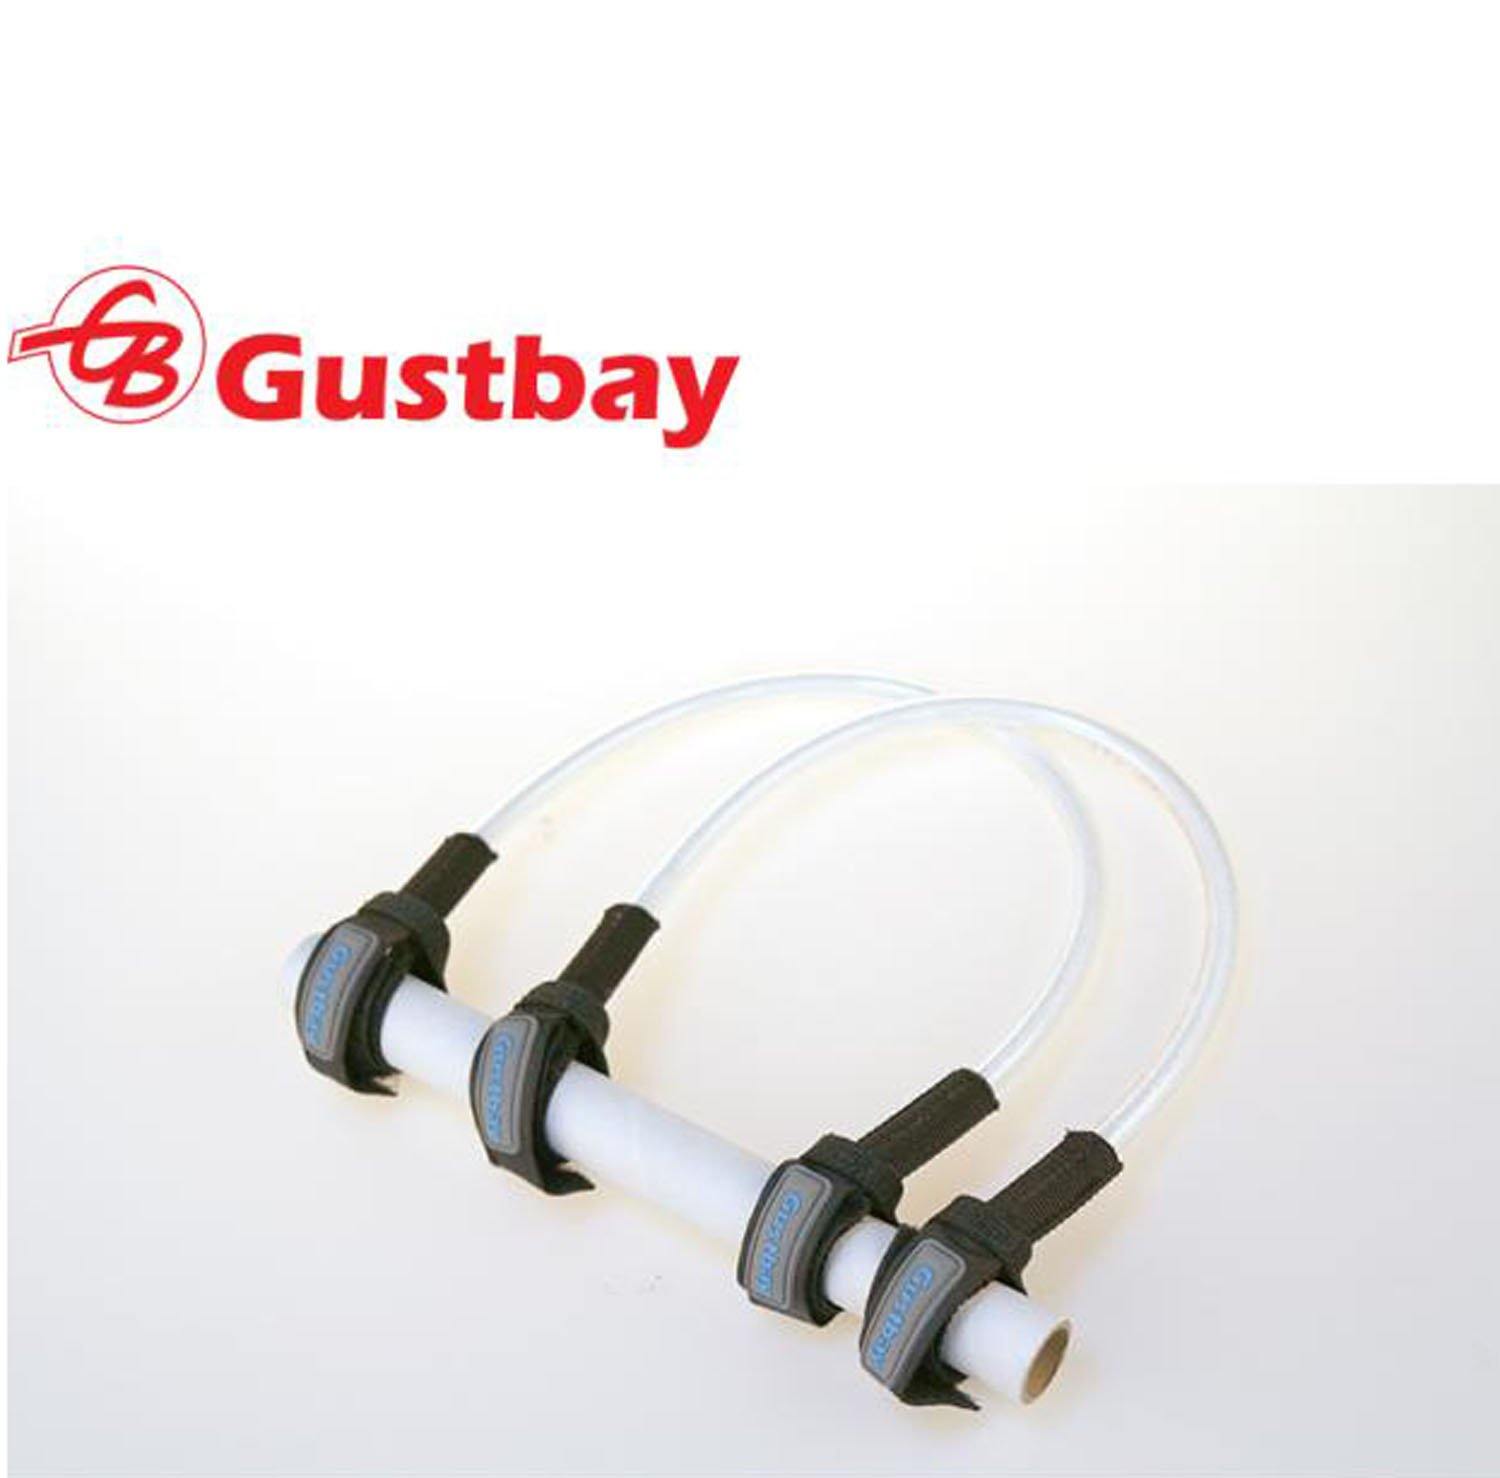 Gustbay 腰鉤繩 固定式 可調式衝浪風帆用腰鈎繩 - Gustbay Windsurfing Accessories Gustbay